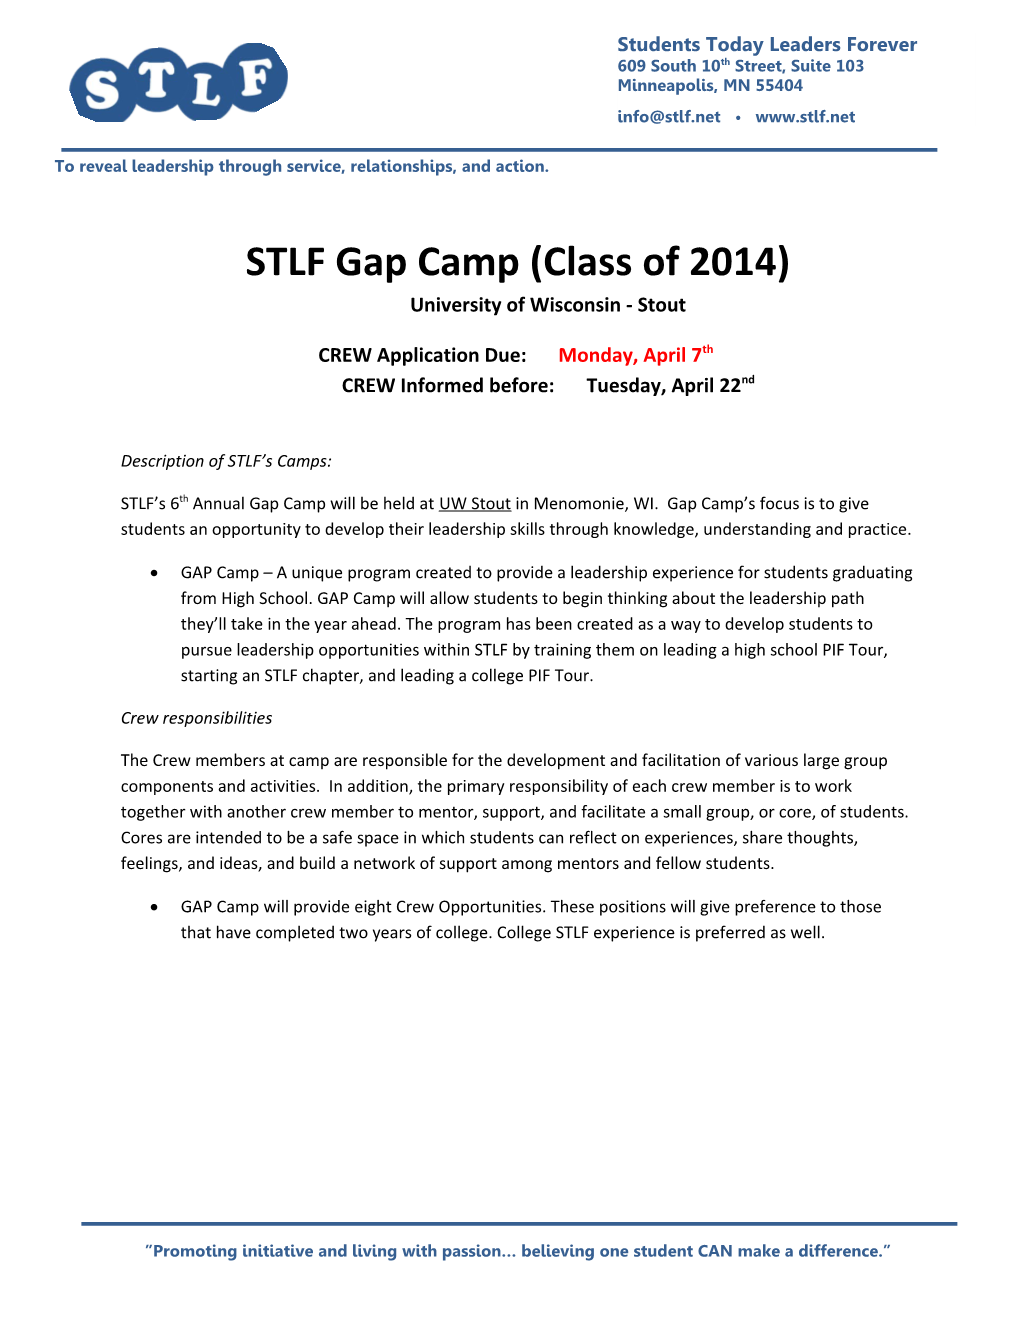 STLF Gap Camp (Class of 2014)University of Wisconsin - Stout